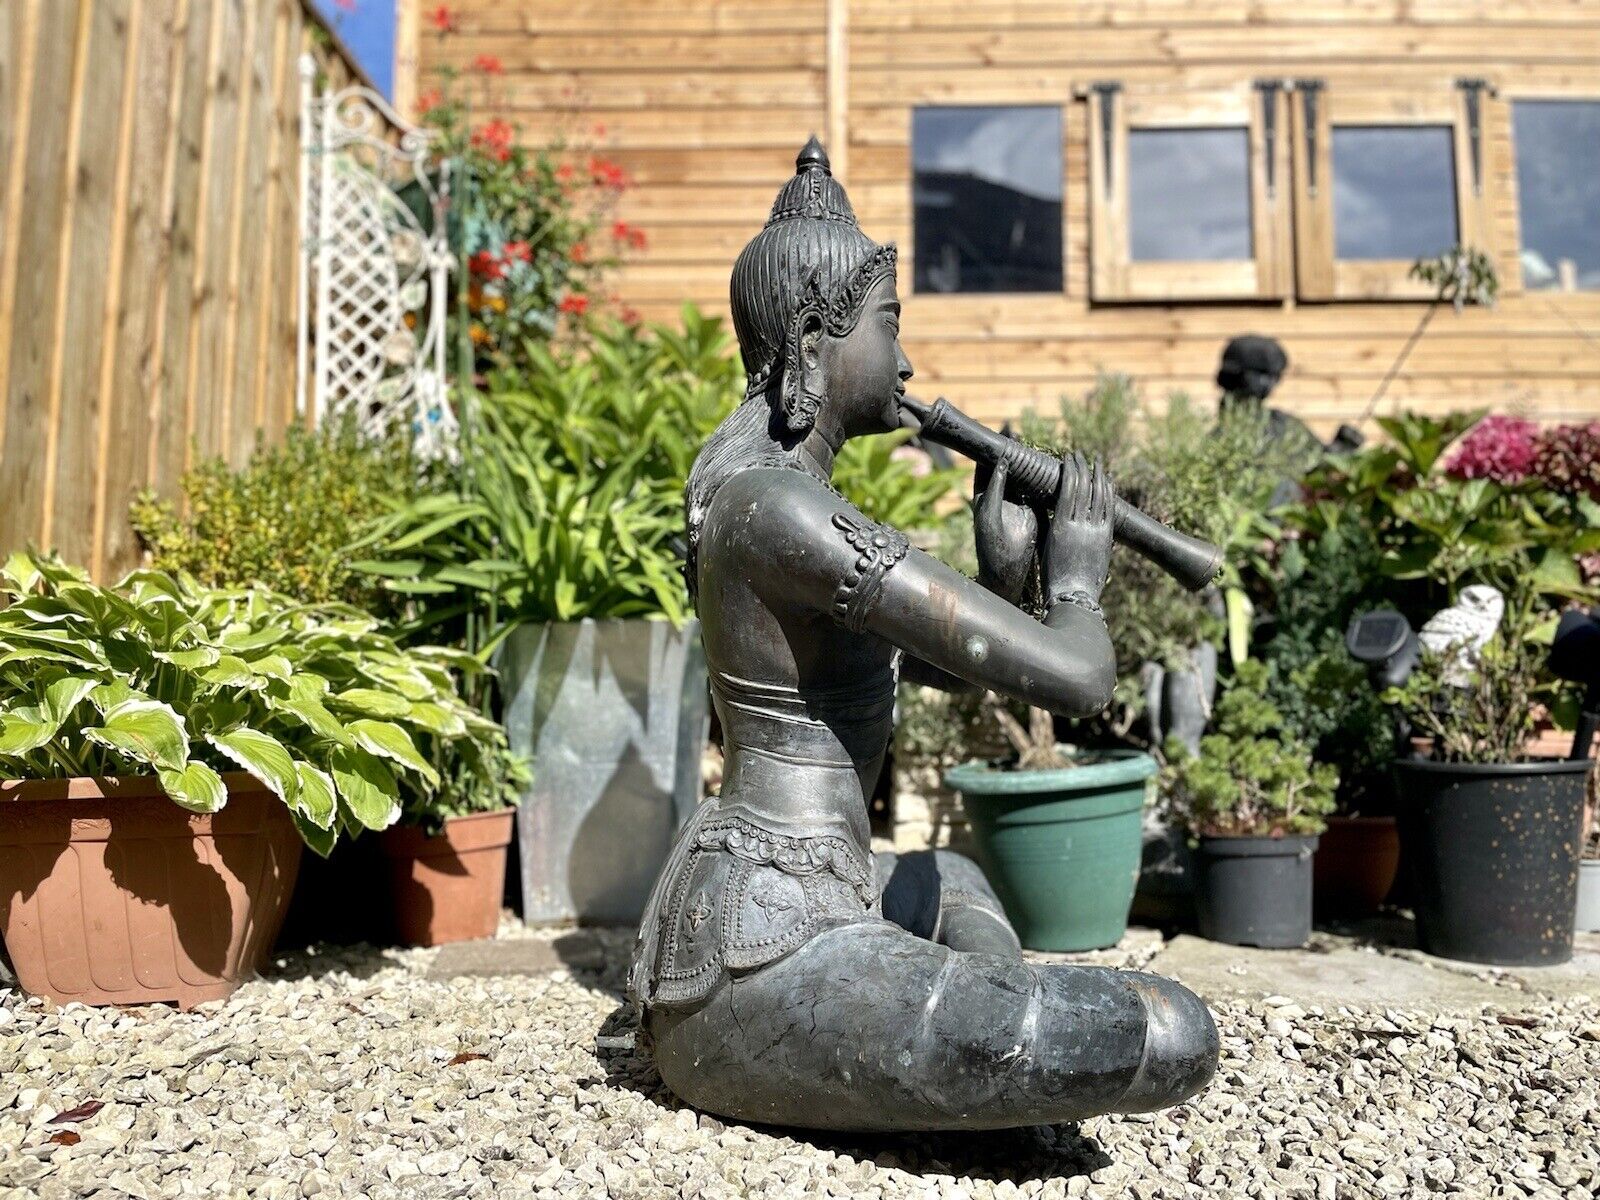 Bronzed Garden Water Feature of a Sitting Deity / Goddess Playing An Instrument